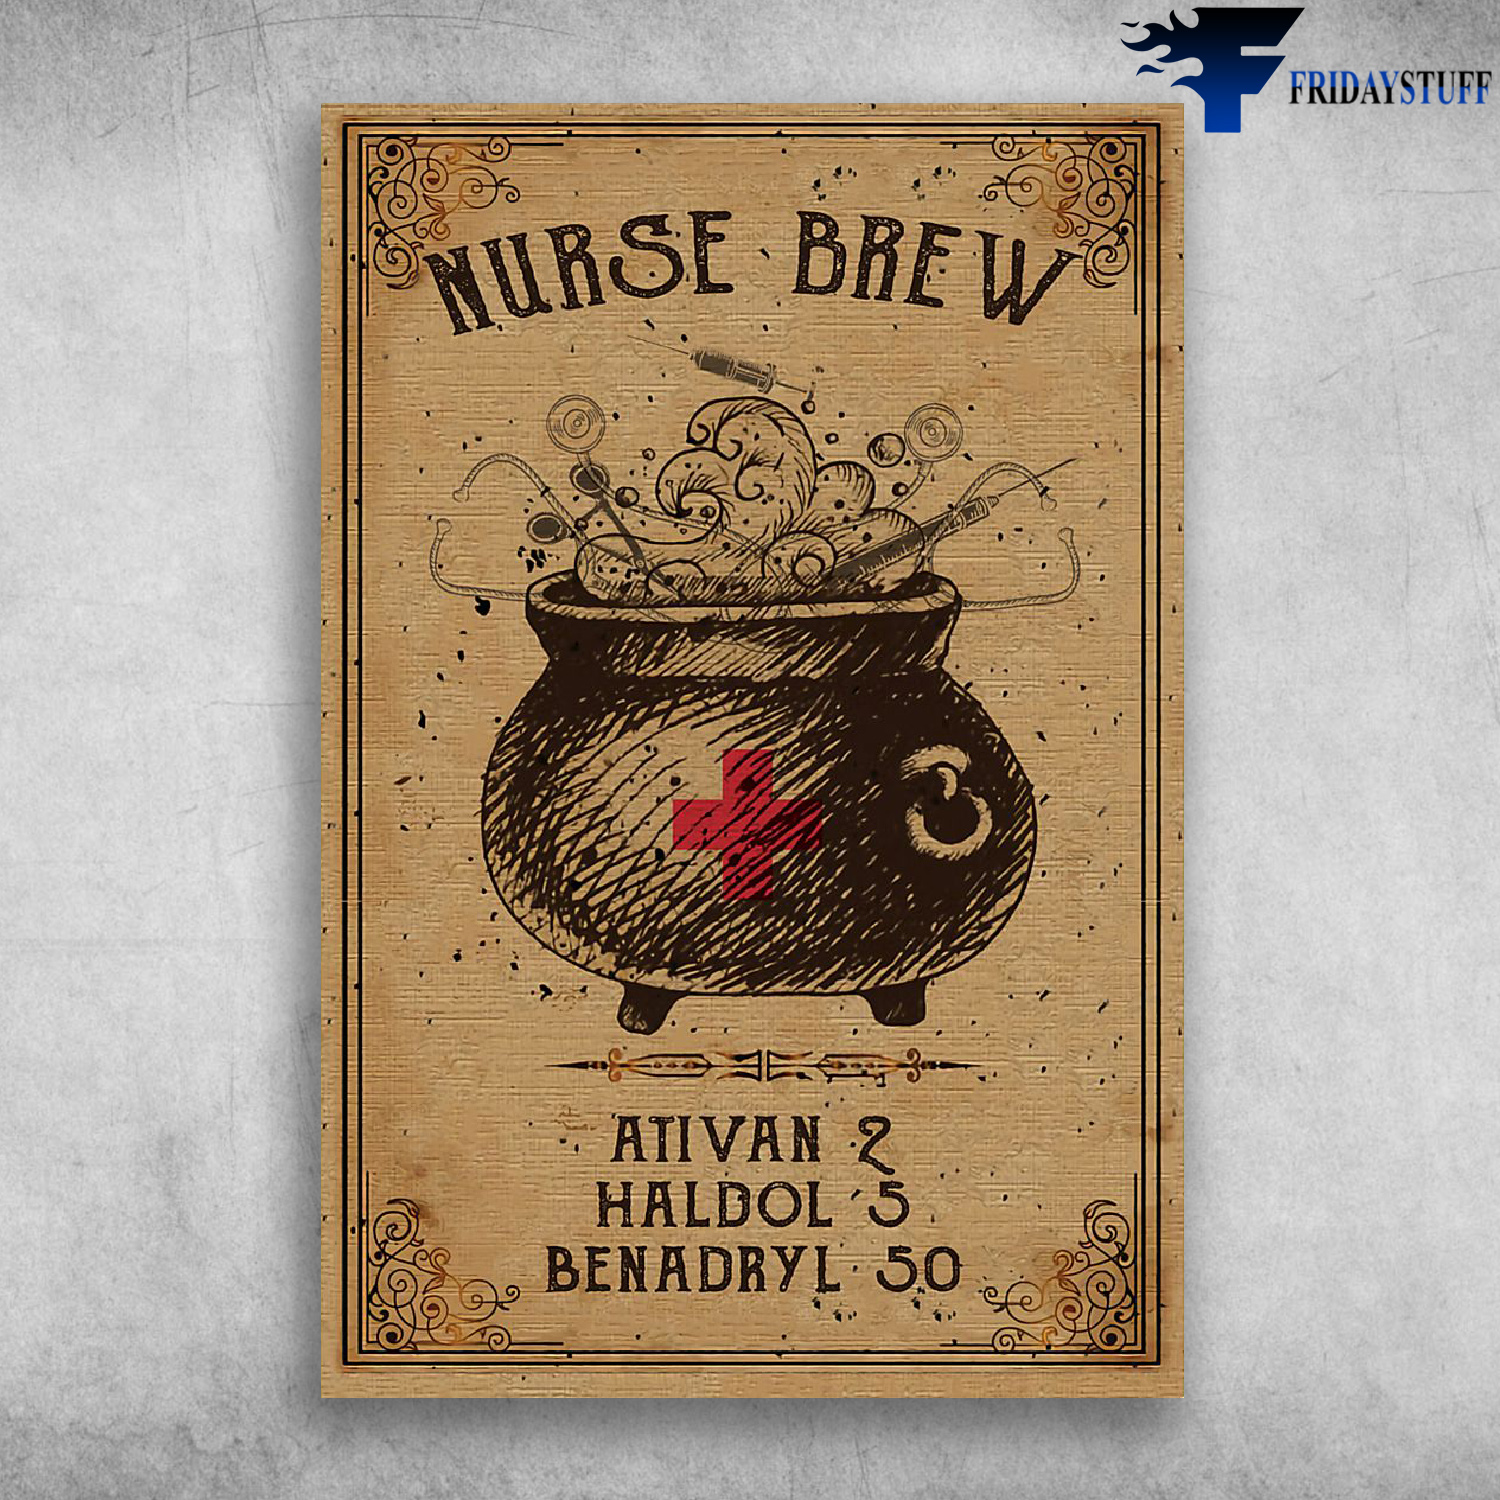 Nurse Brew Ativan 2 Haldol 5 Benadryl 50 Halloween